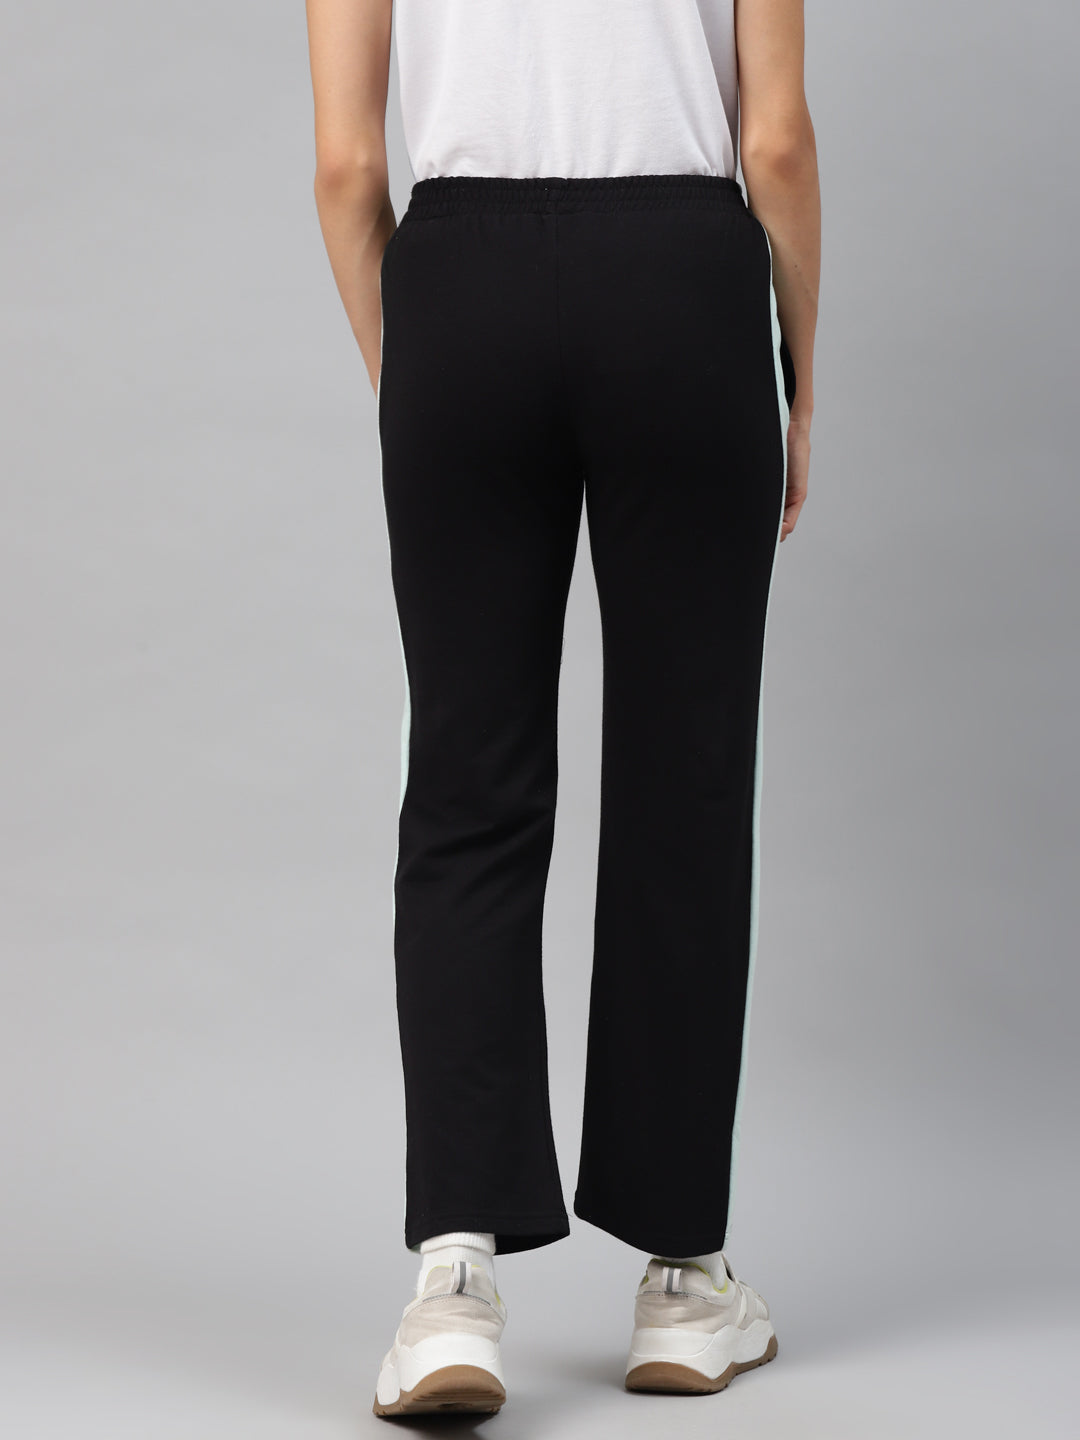 Clothmaster Solid Women Black Track Pants - Buy Clothmaster Solid Women  Black Track Pants Online at Best Prices in India | Flipkart.com